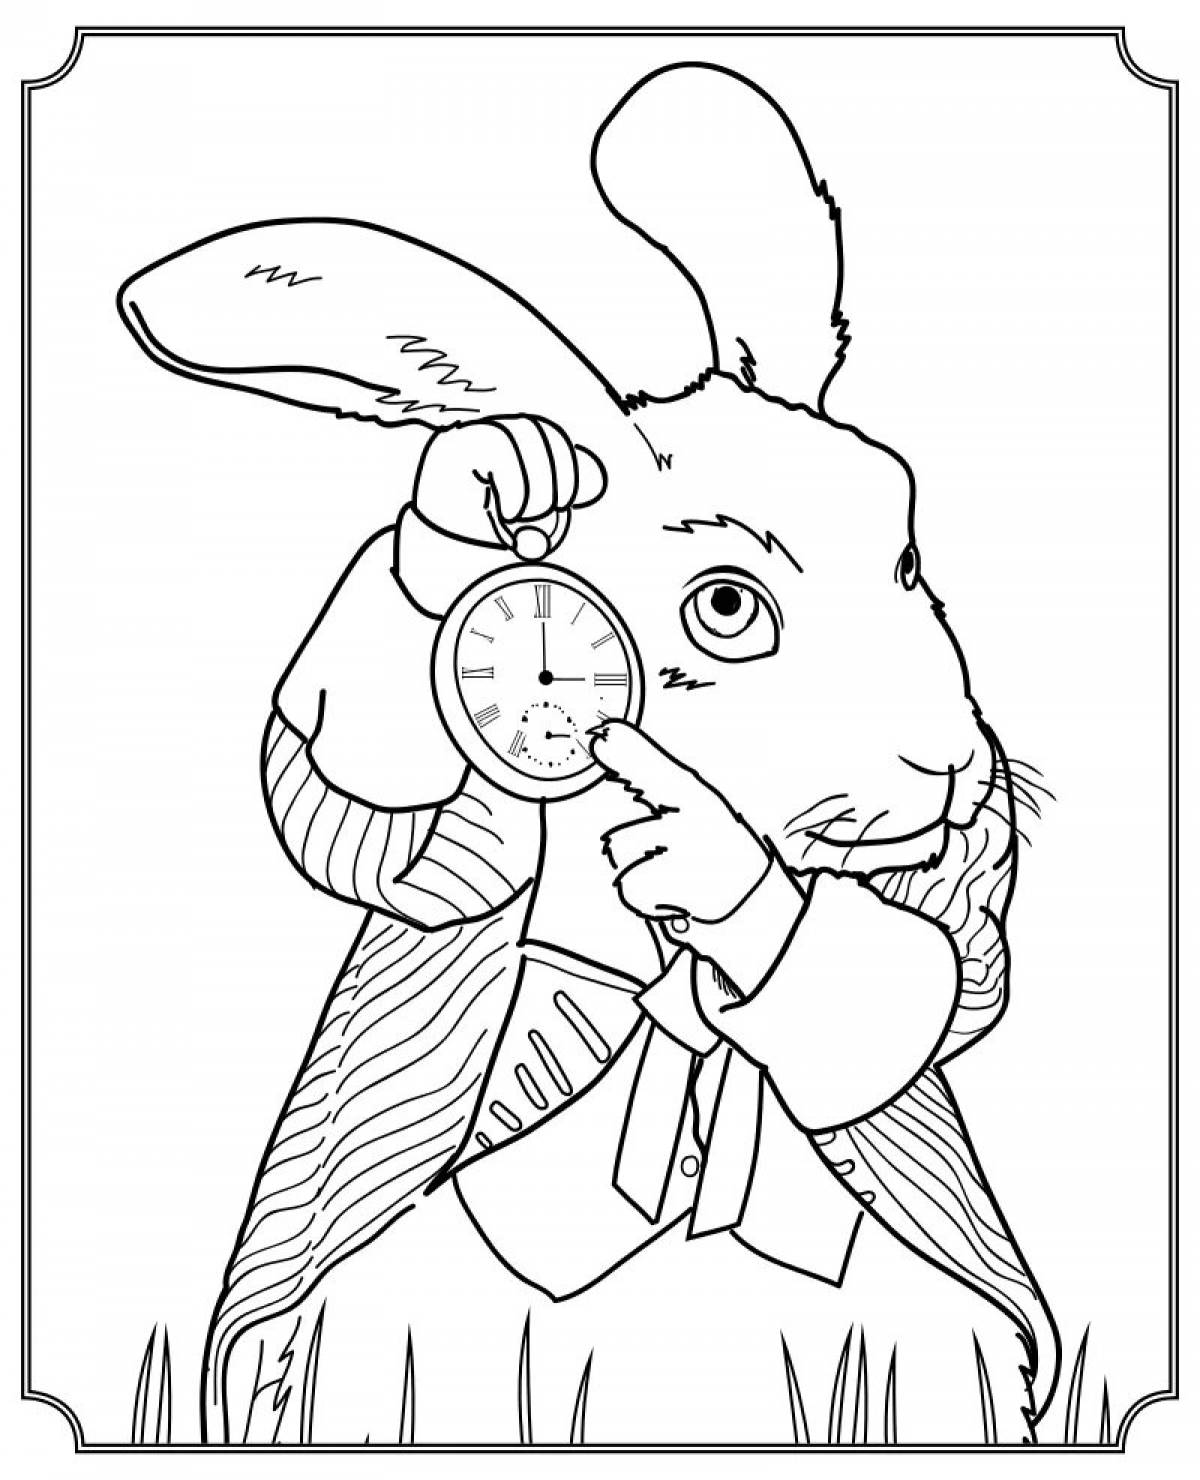 Bunny from alice in wonderland #16